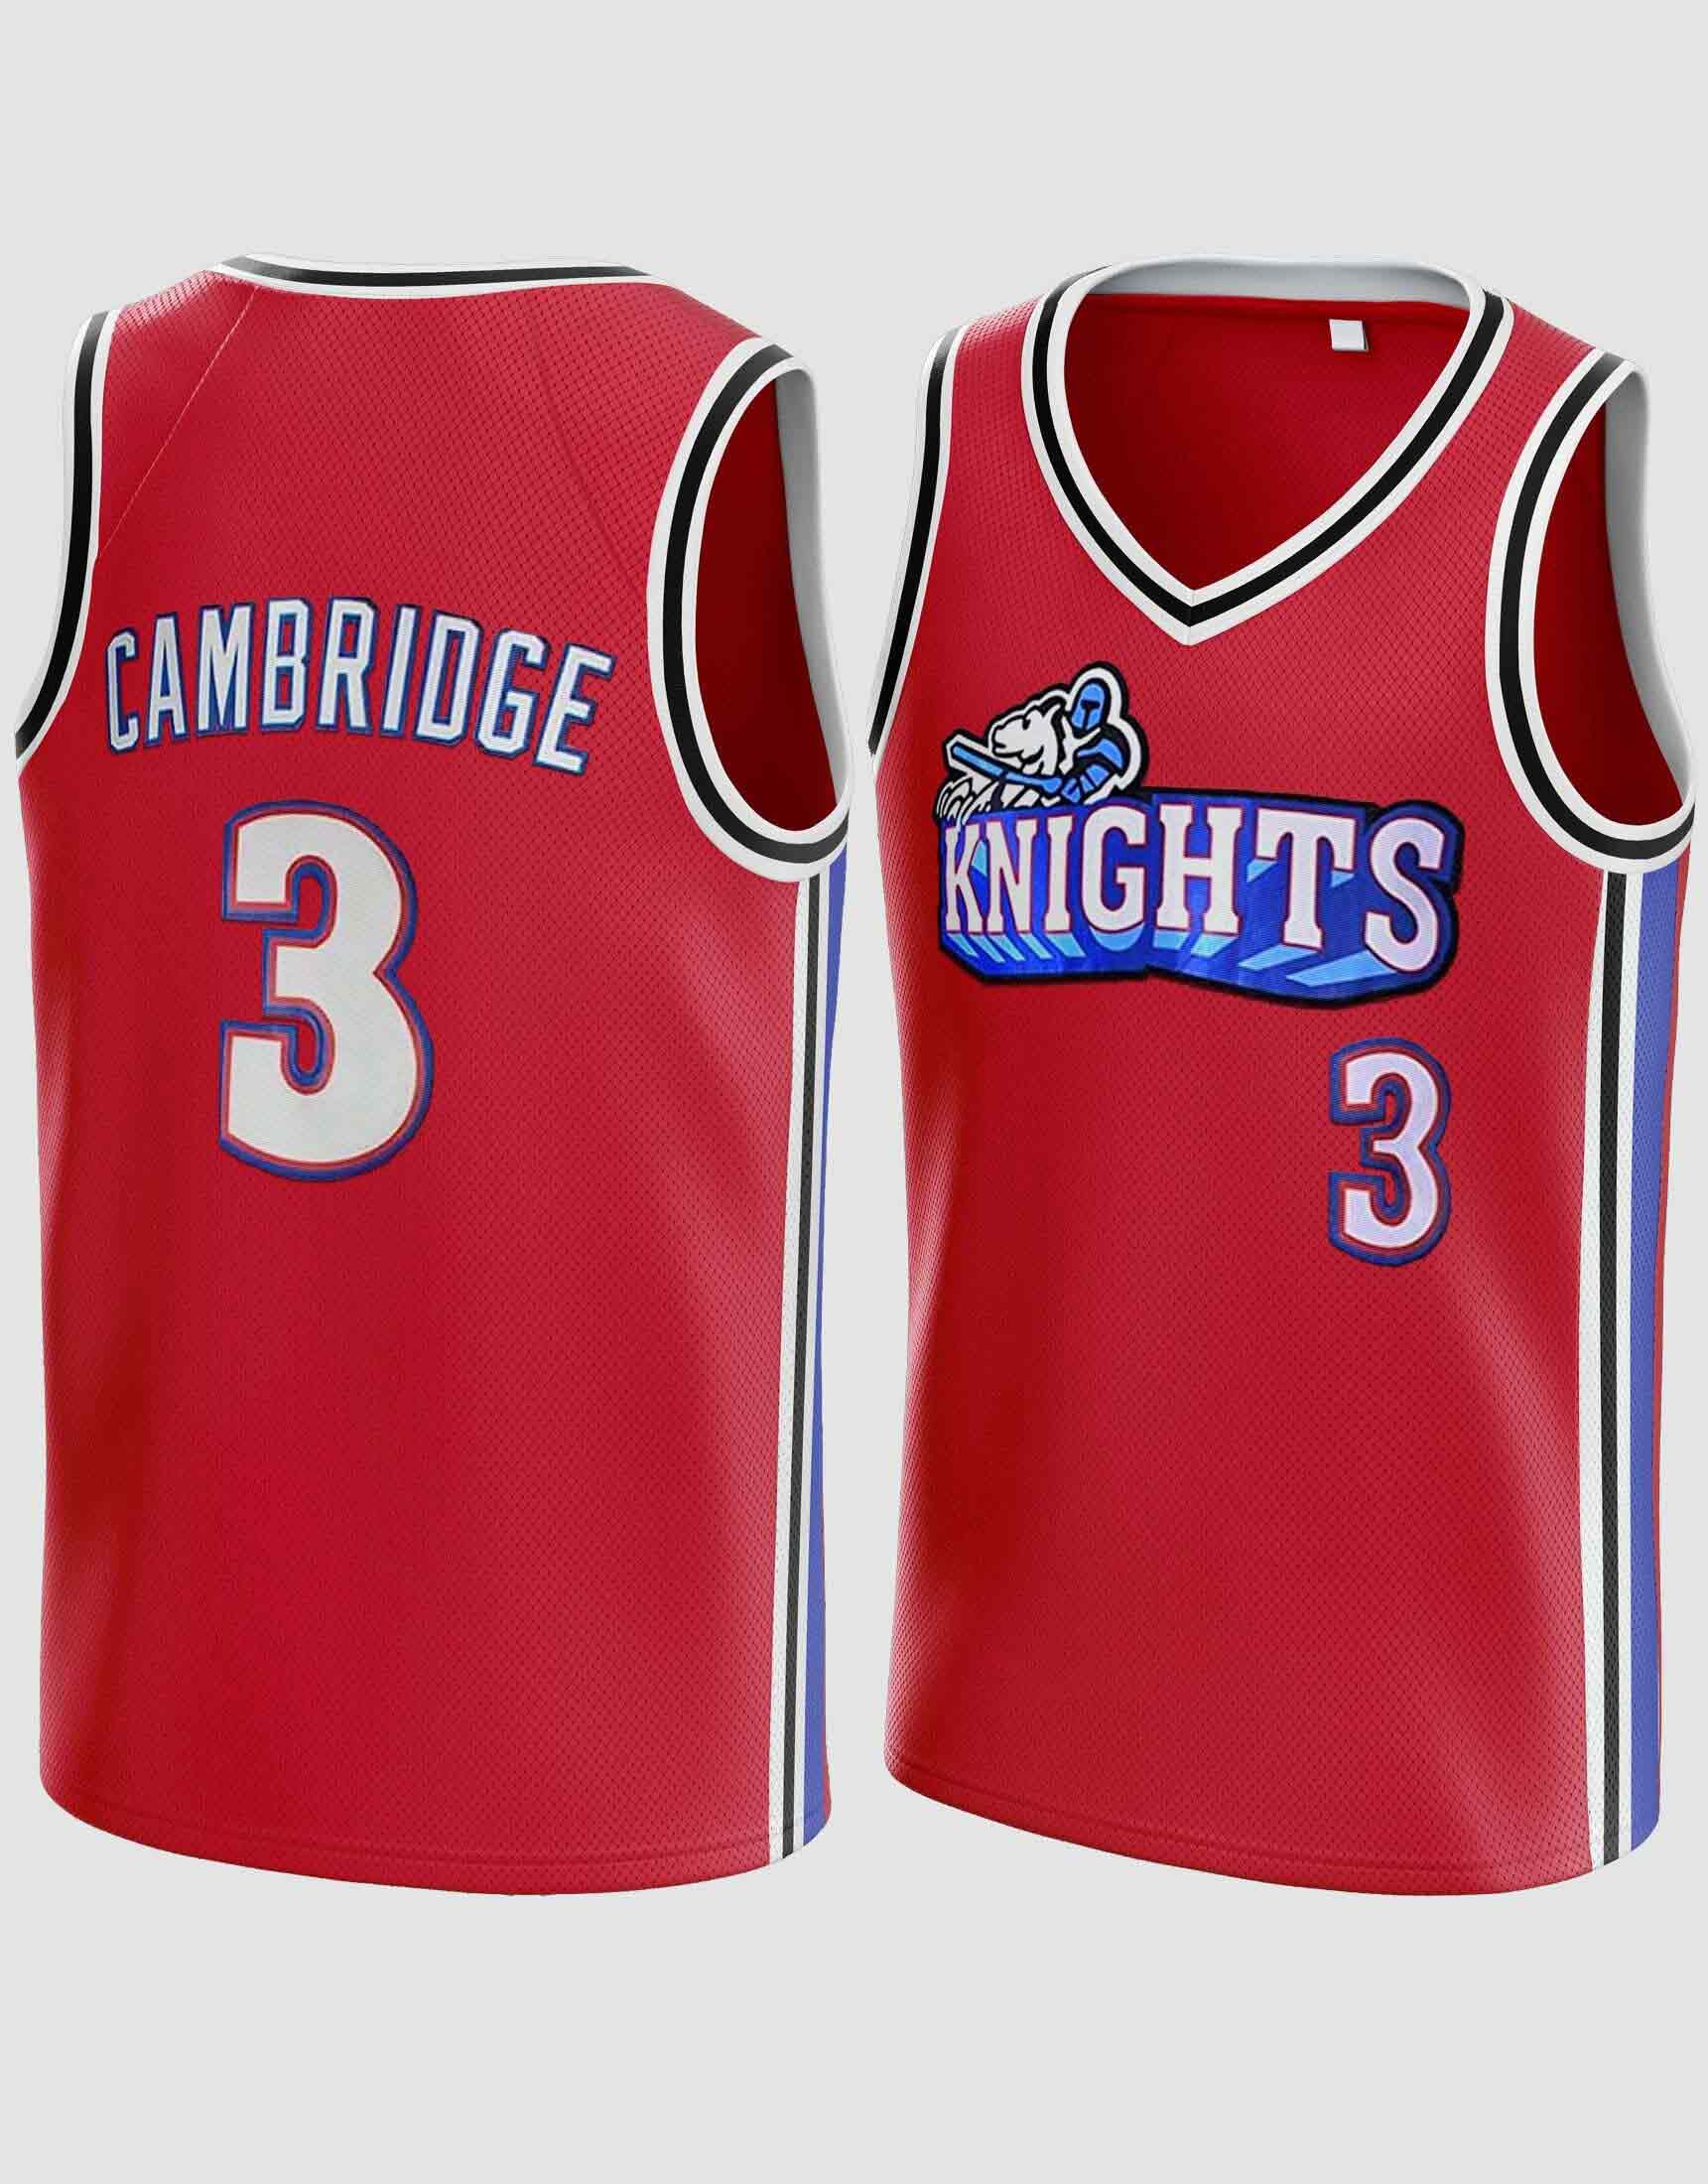 STRT Men's Calvin Cambridge #3 LA Knights Basketball Jersey.